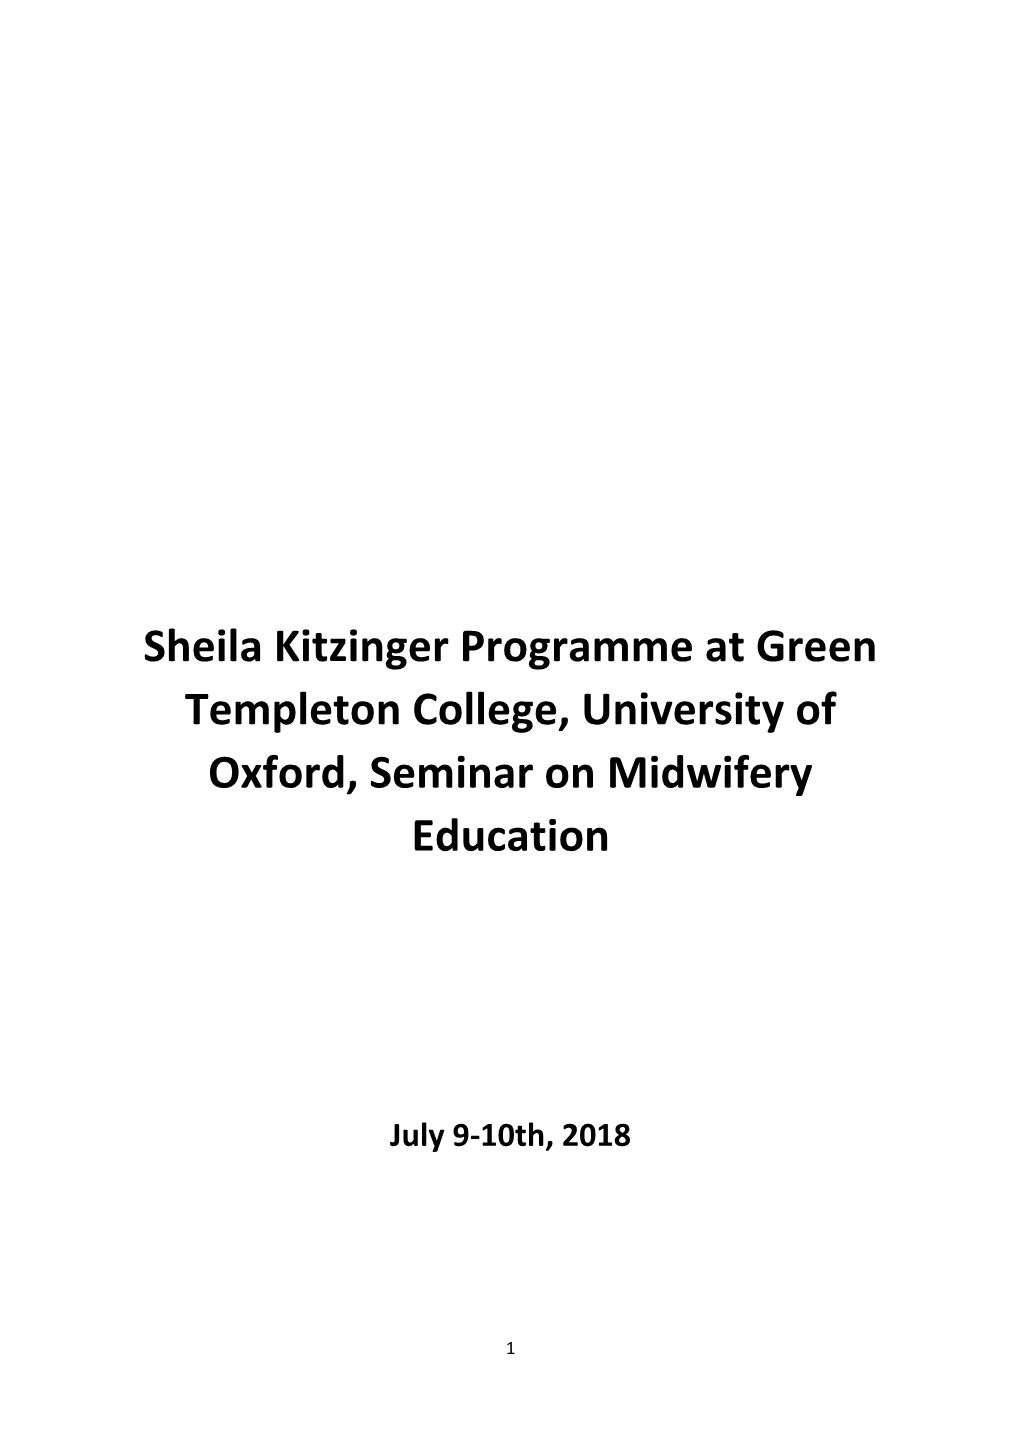 Sheila Kitzinger Programme at Green Templeton College, University of Oxford, Seminar on Midwifery